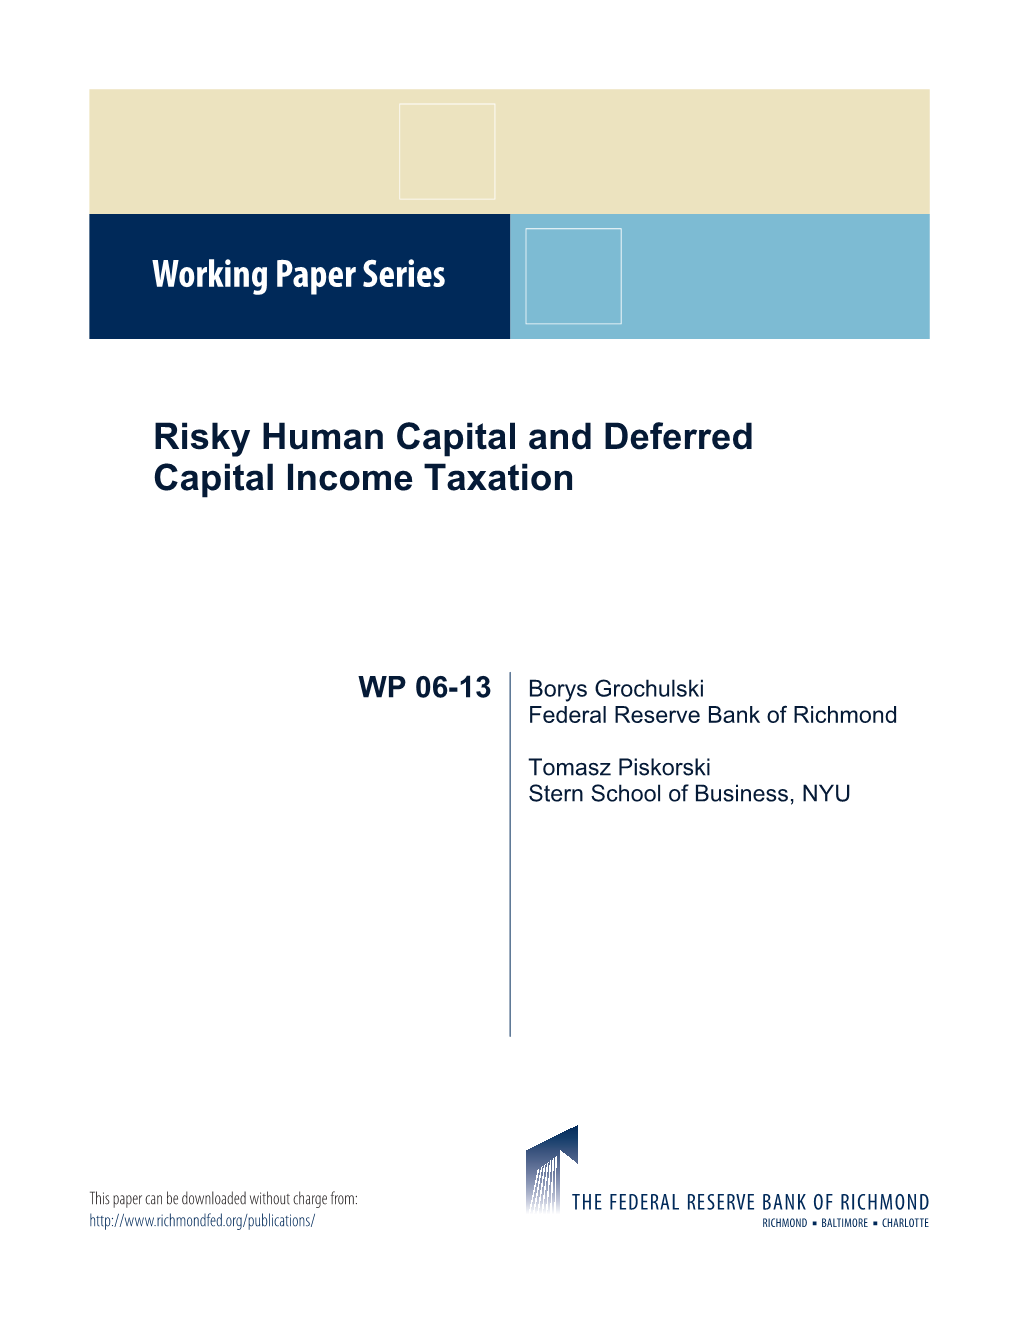 Risky Human Capital and Deferred Capital Income Taxation∗